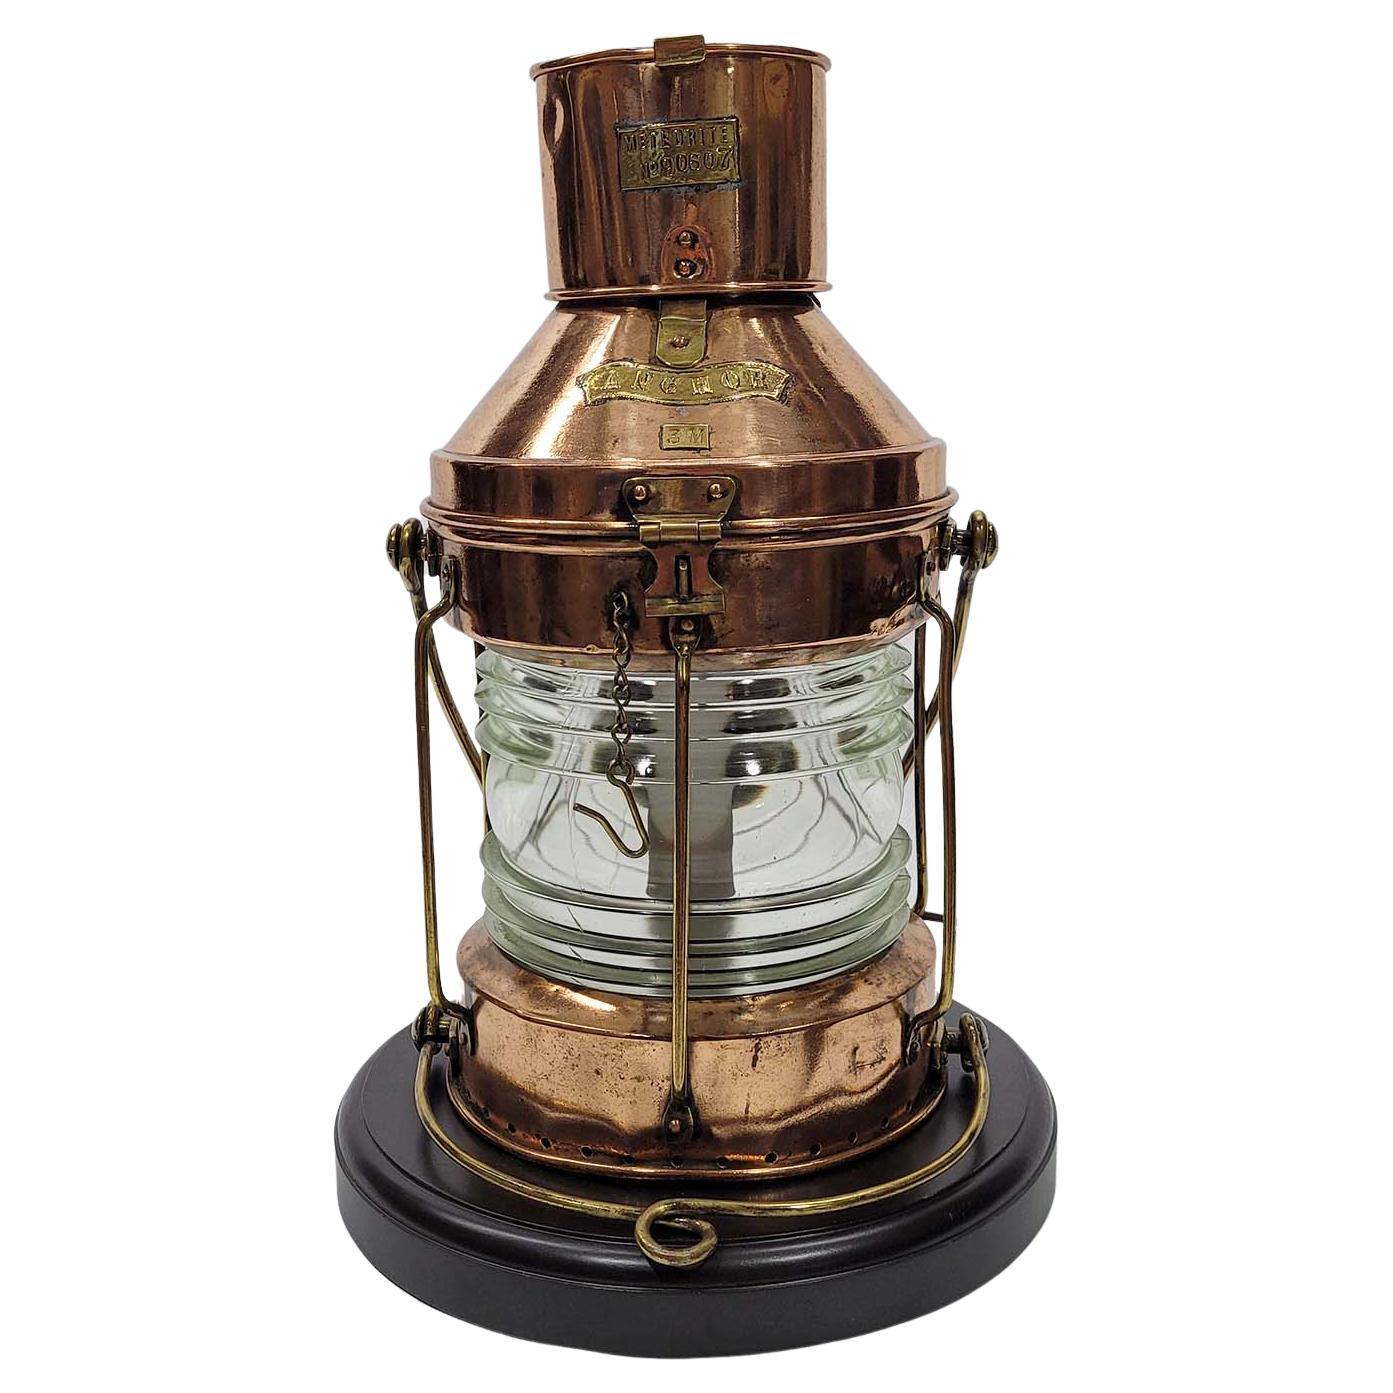 Copper Ships Lantern by English Maker